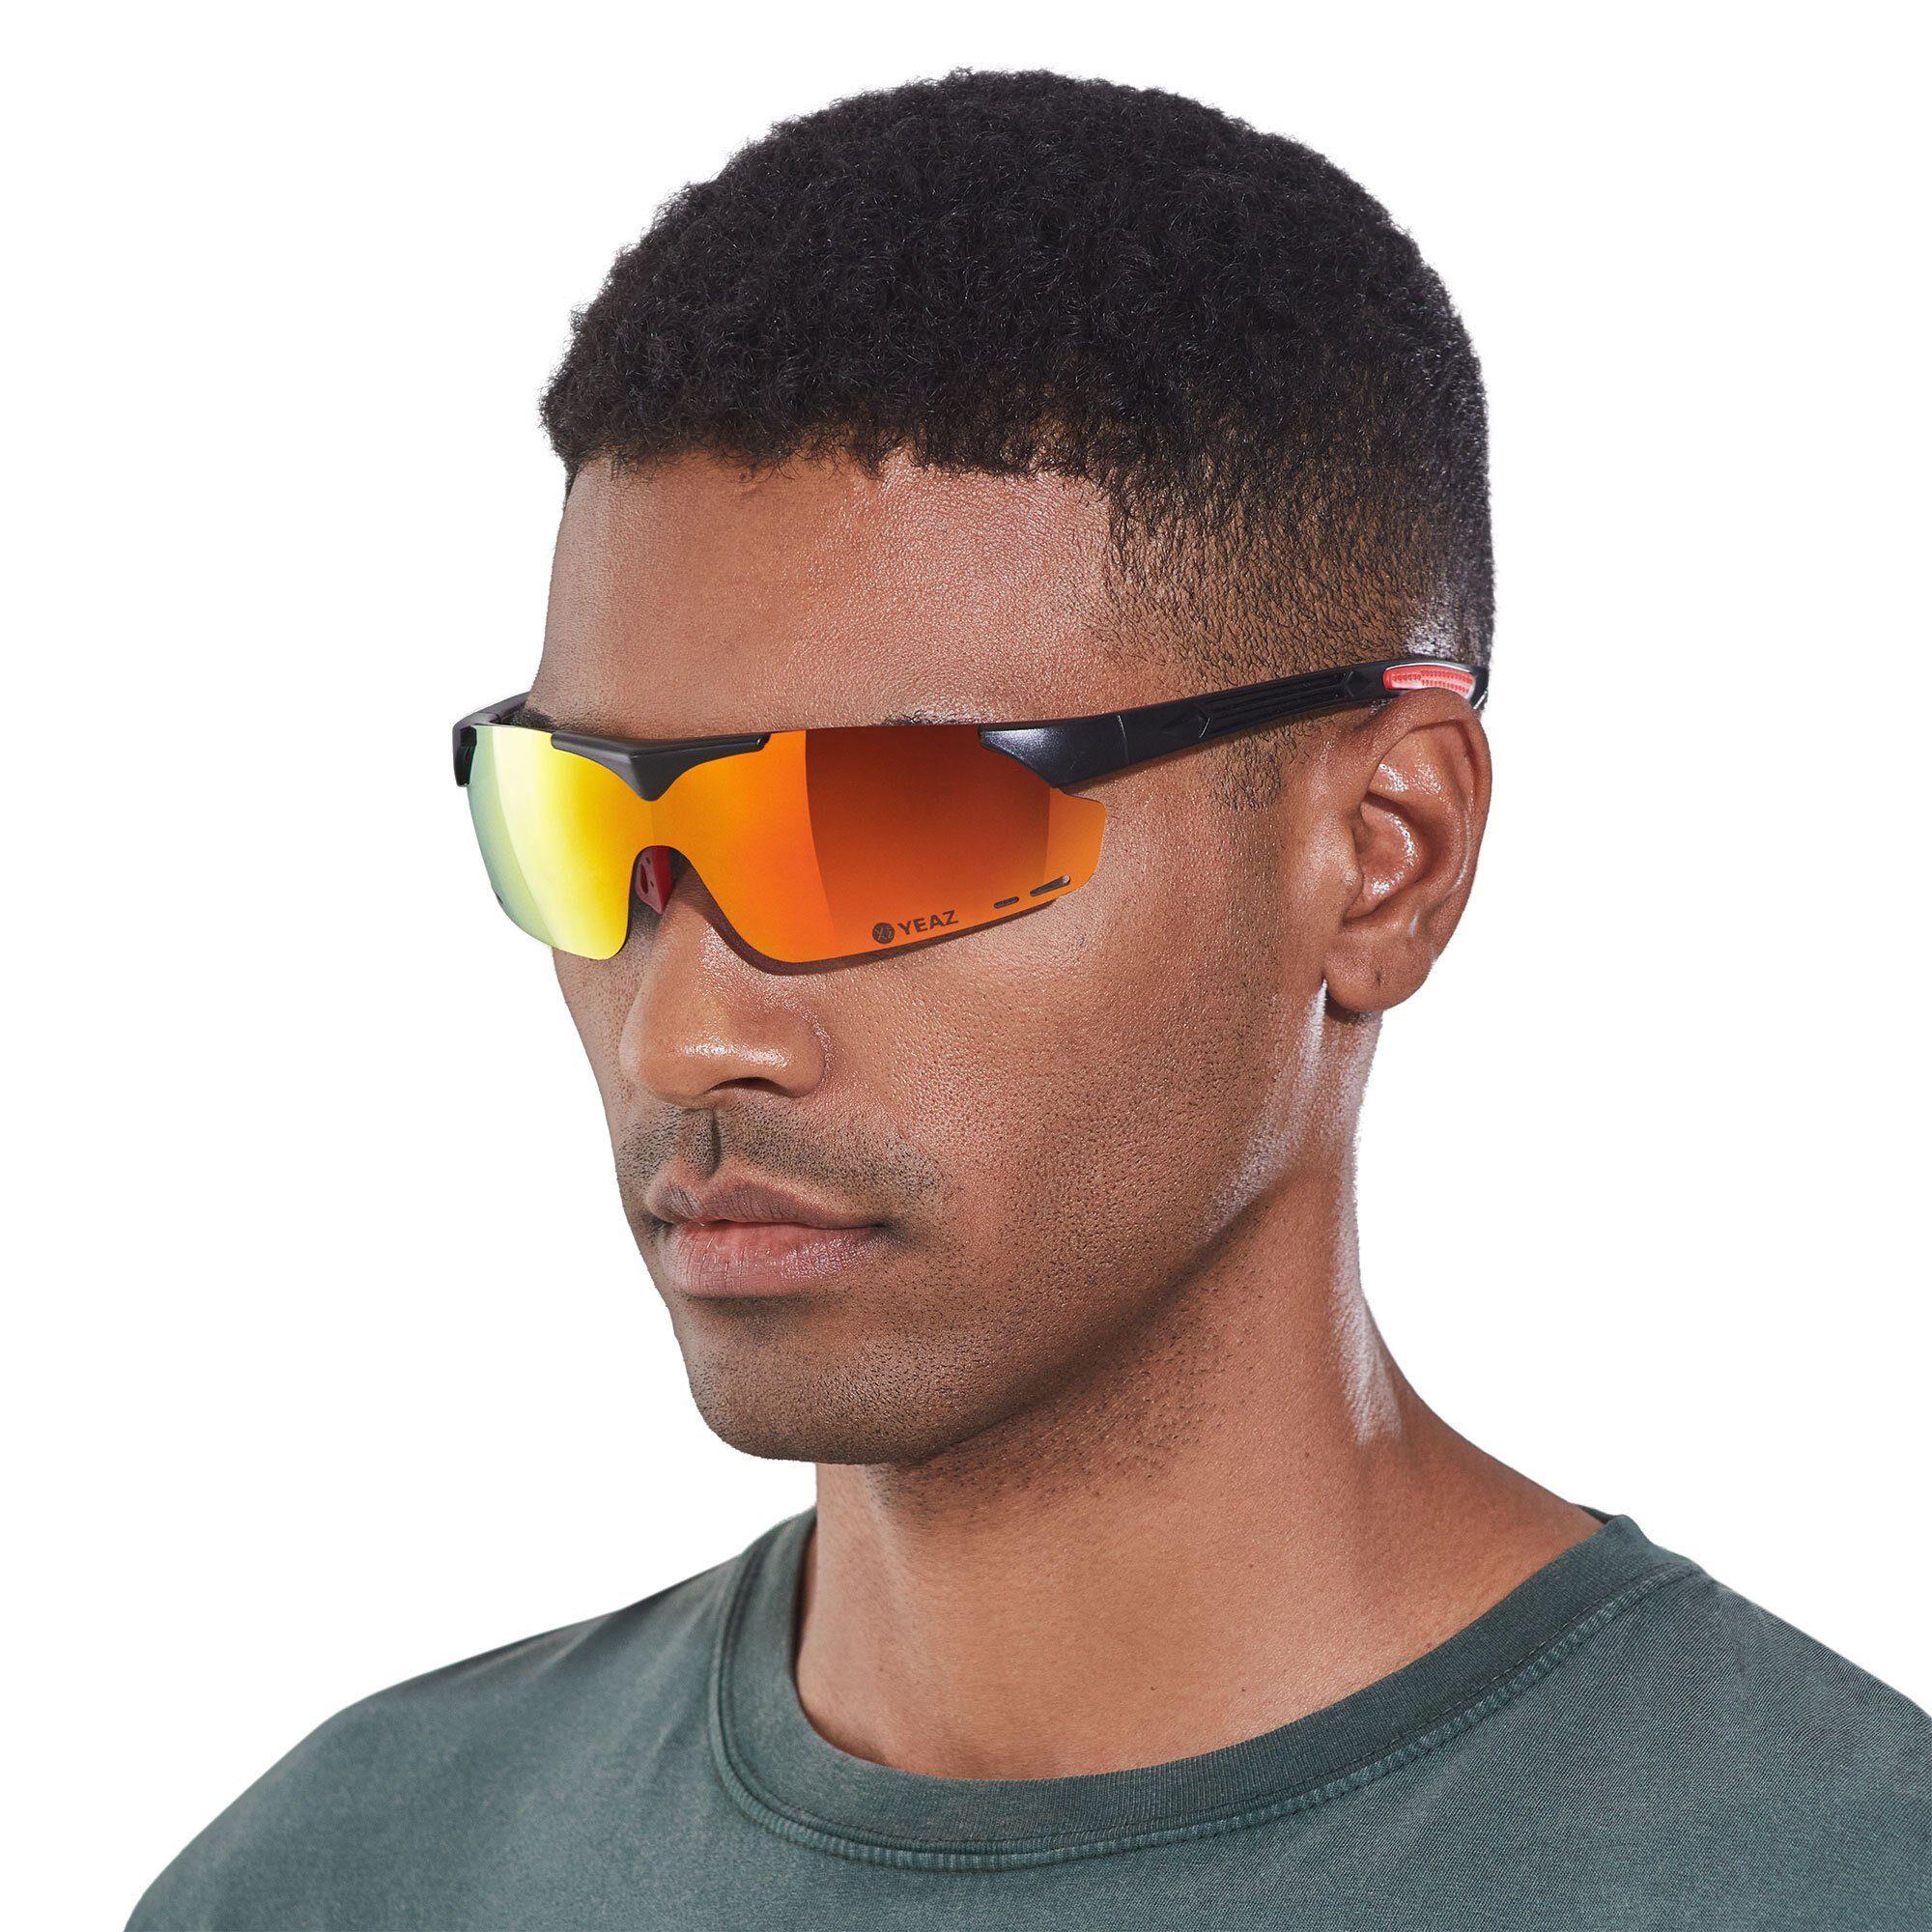 YEAZ Sportbrille SUNUP magnet-sport-sonnenbrille, Sport-Sonnenbrille mit Magnetsystem | Brillen